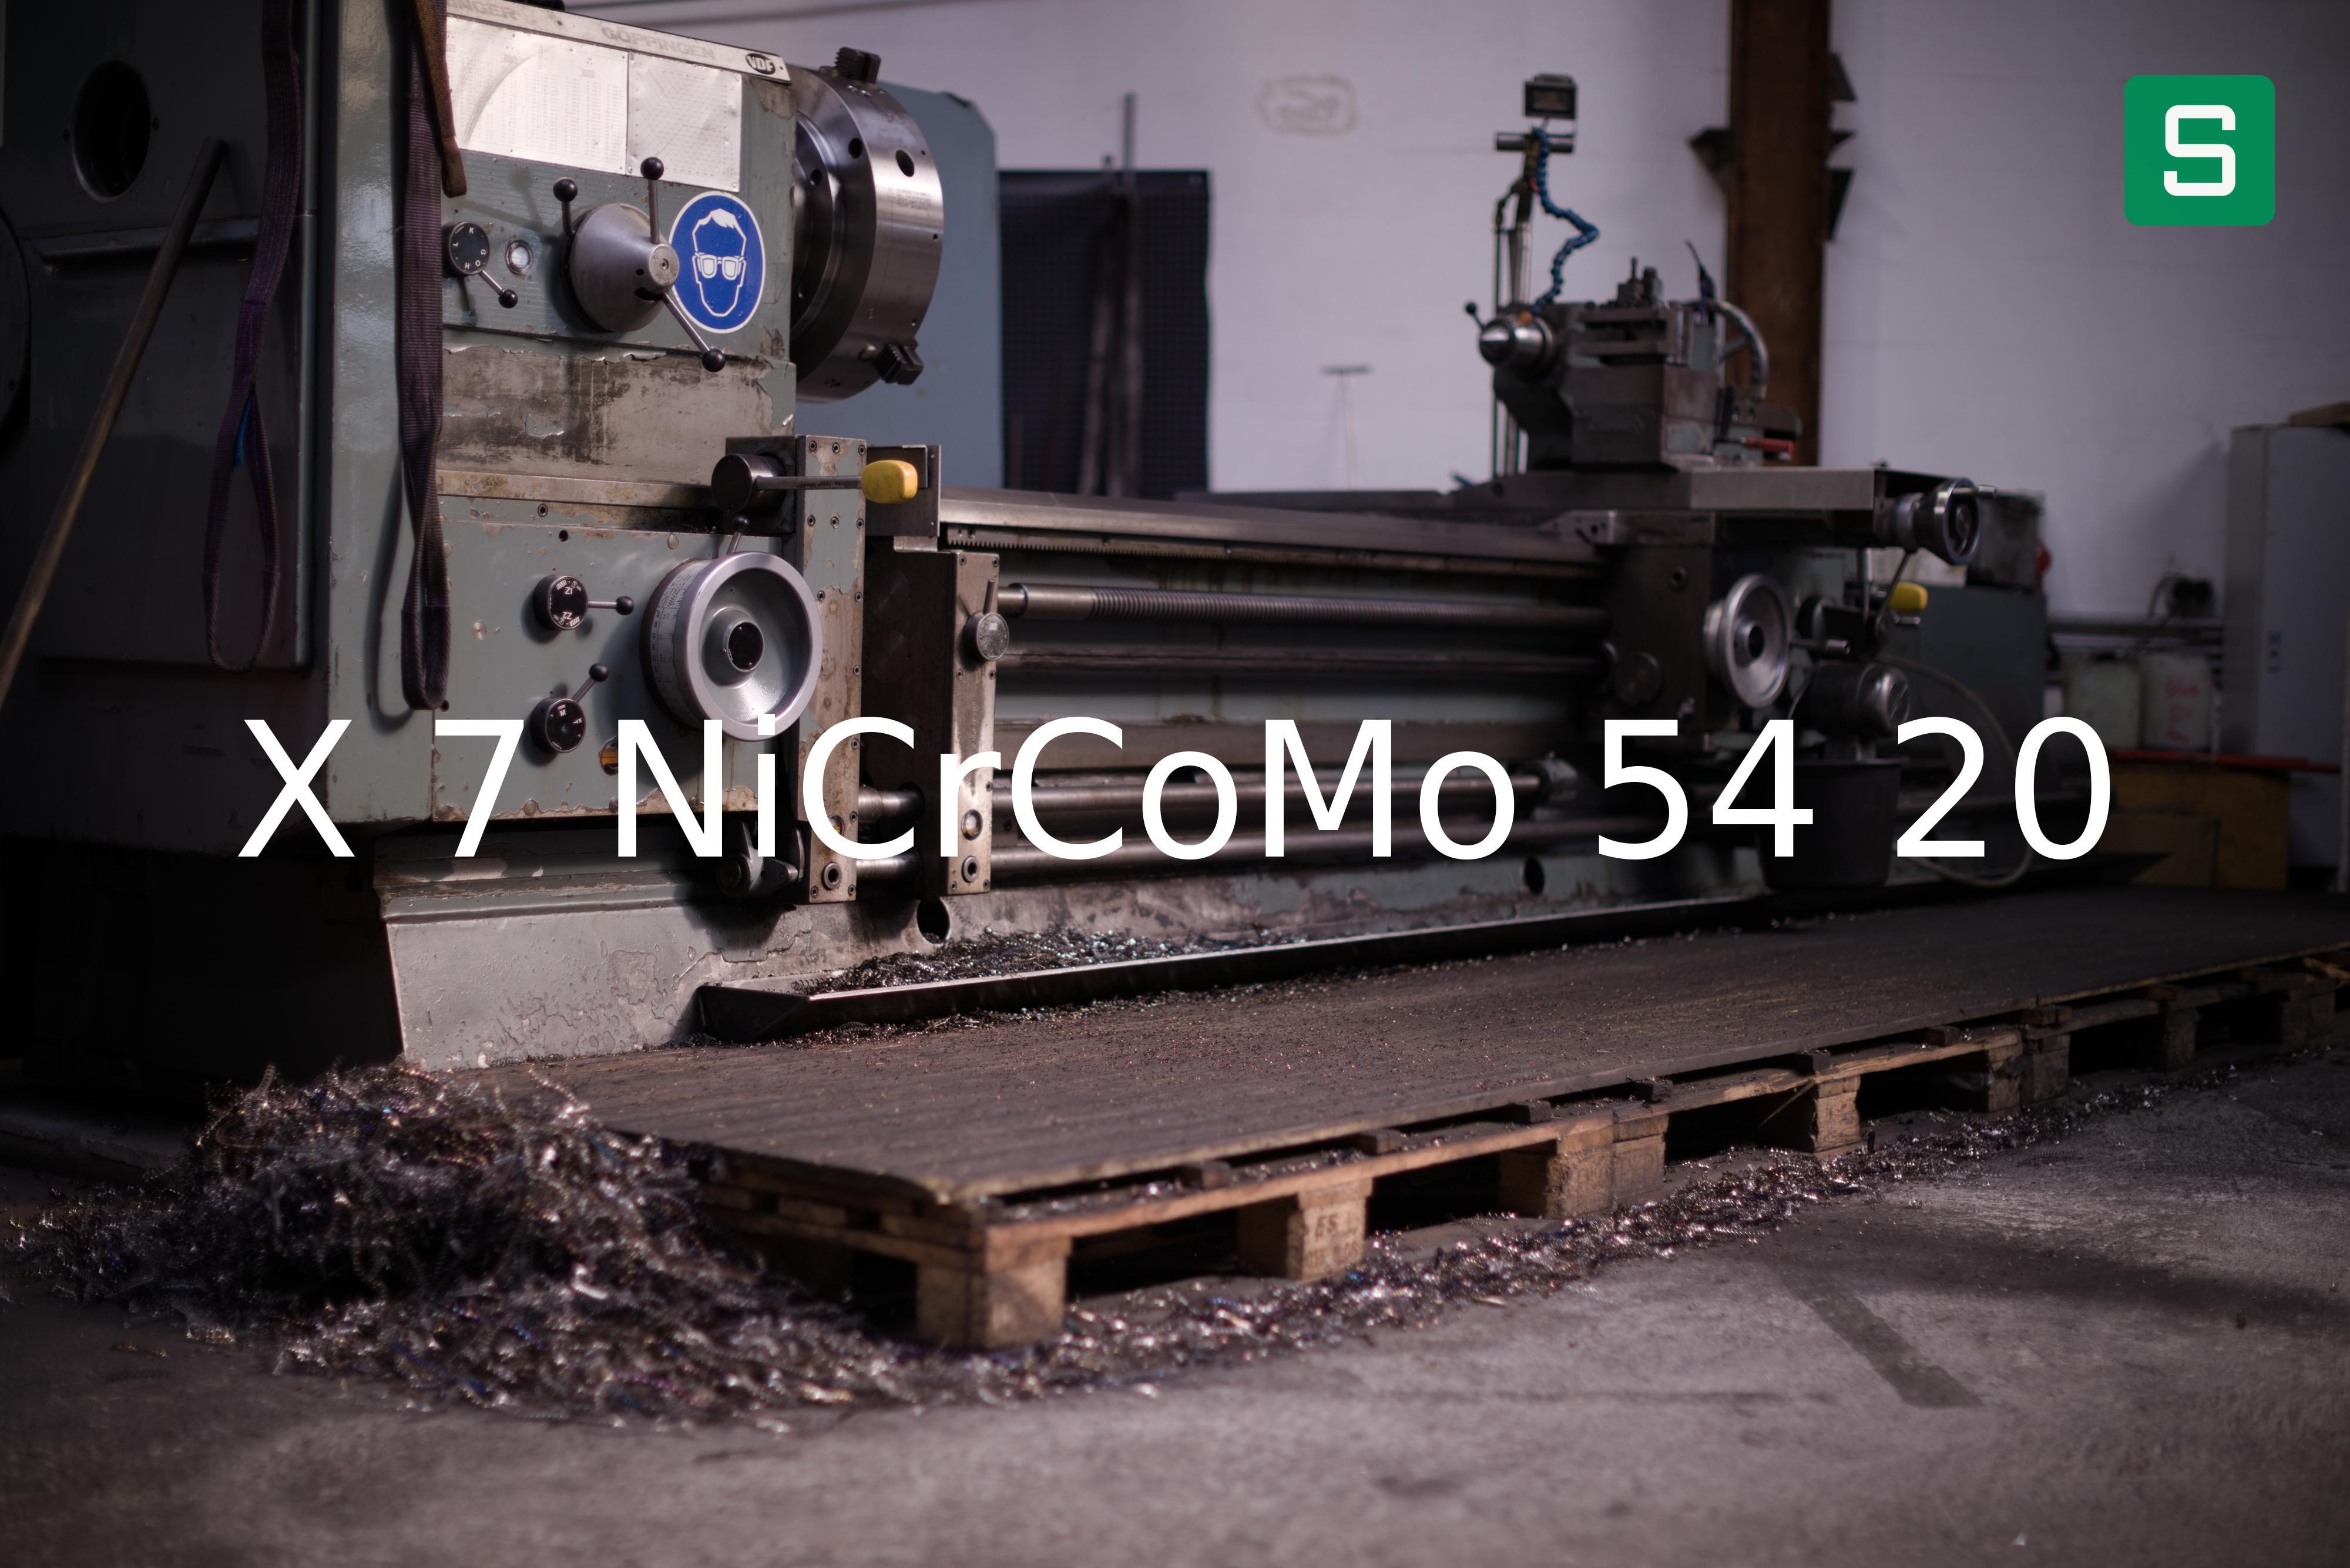 Steel Material: X 7 NiCrCoMo 54 20